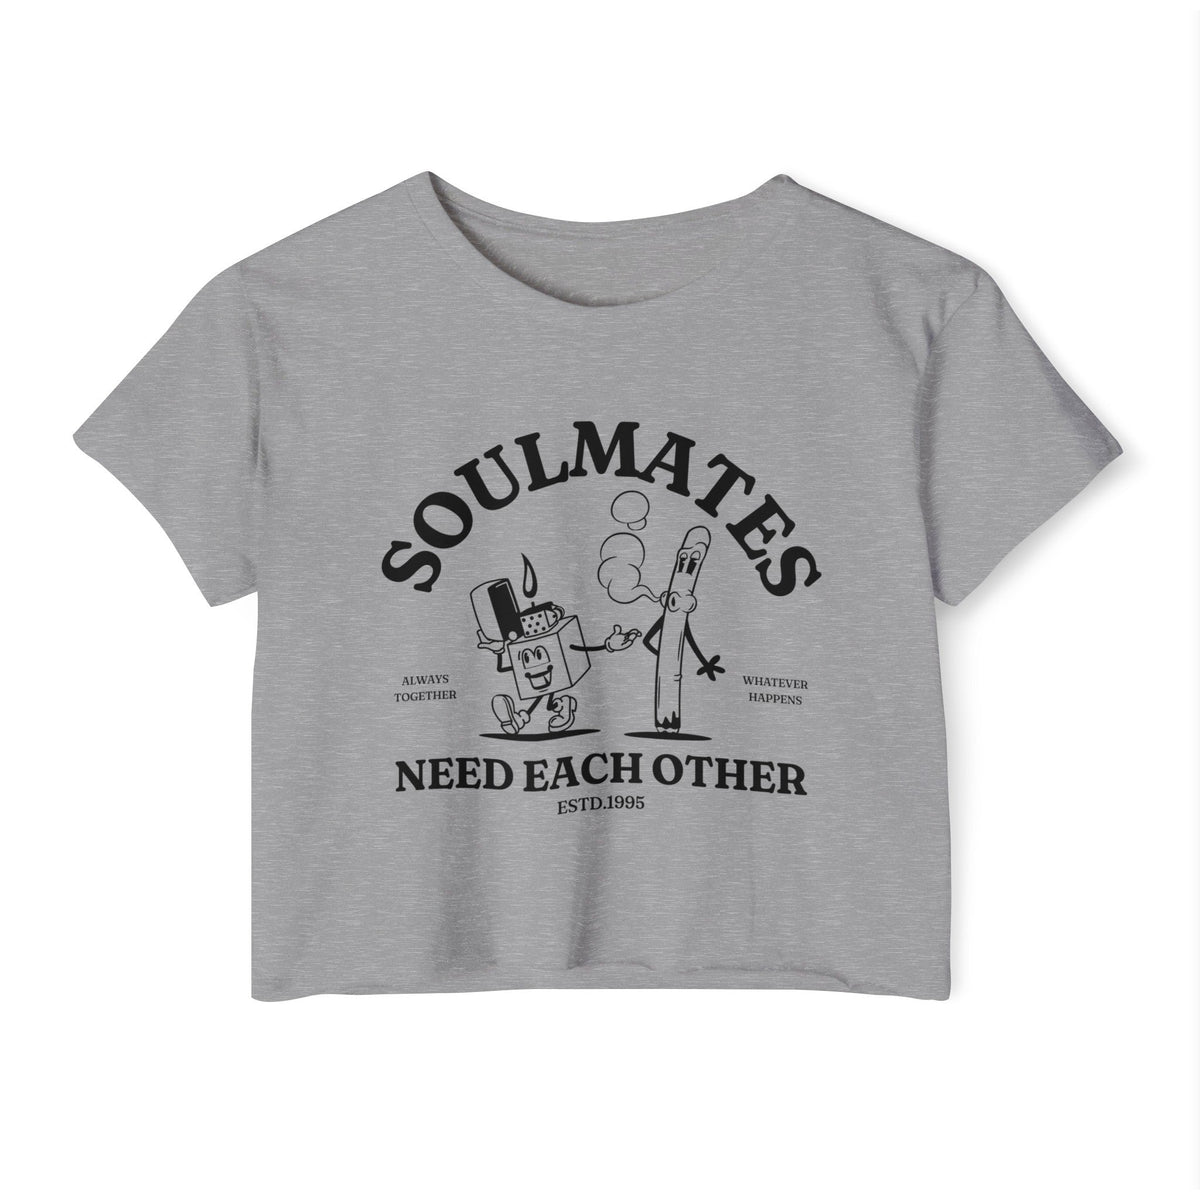 Soulmates Women's Crop Top - Goth Cloth Co.T - Shirt20305202816073124713